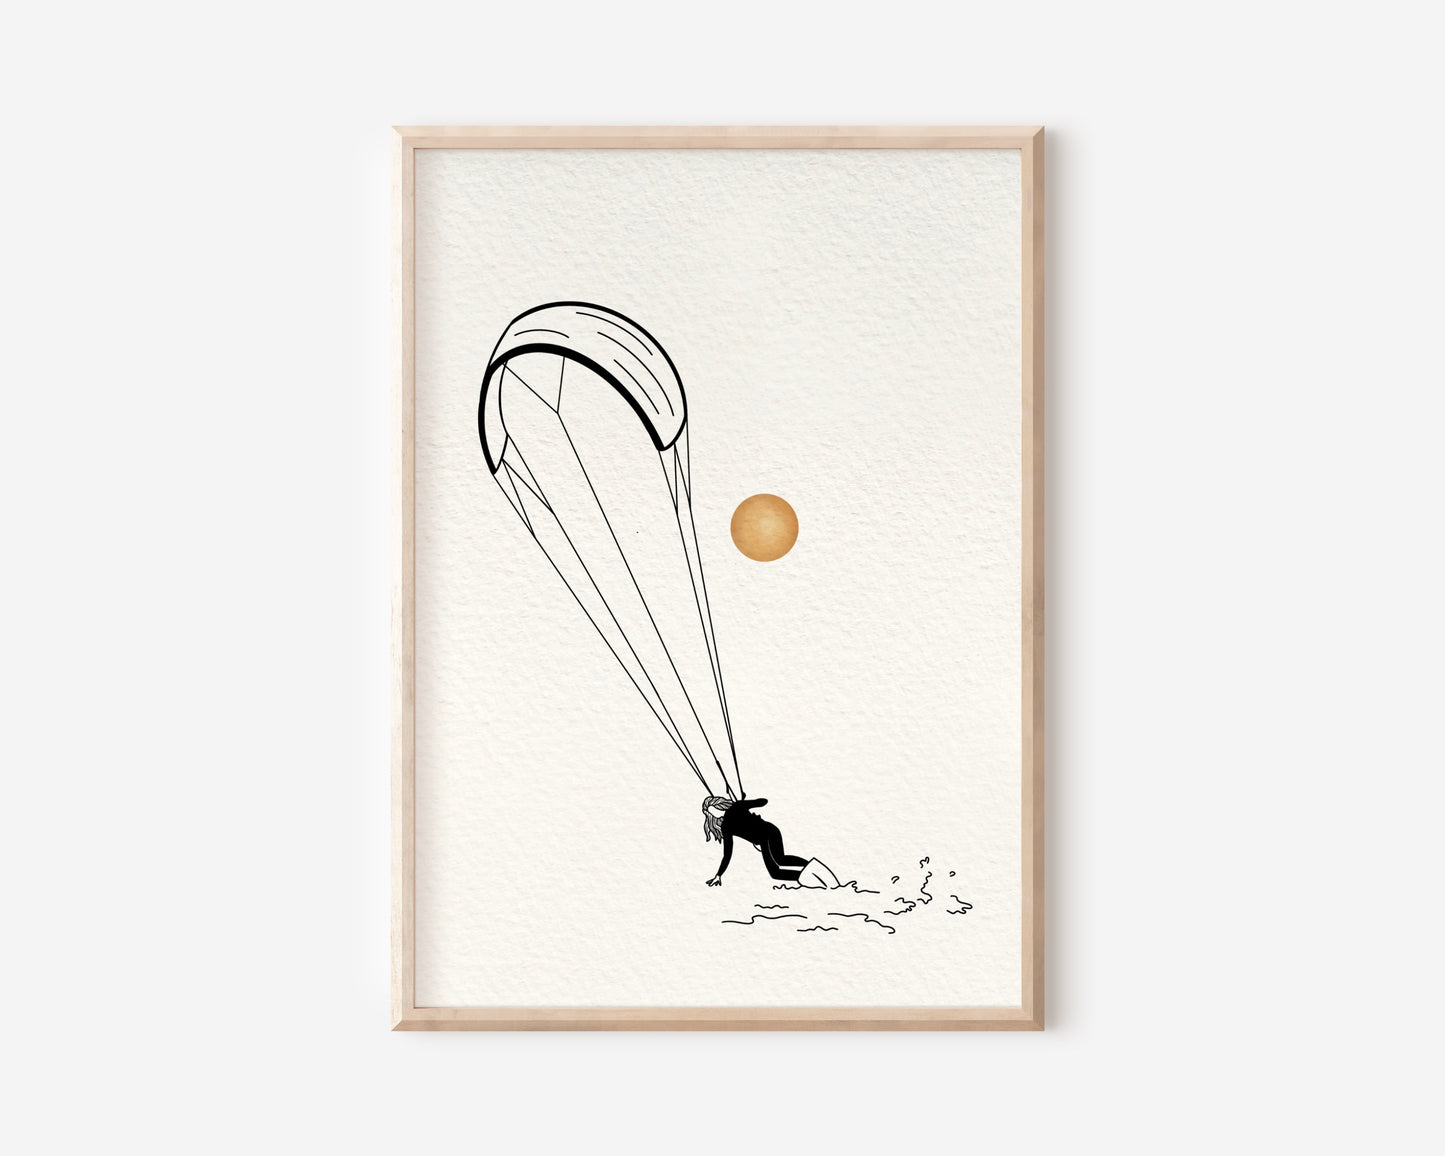 Kite - Art print - A4